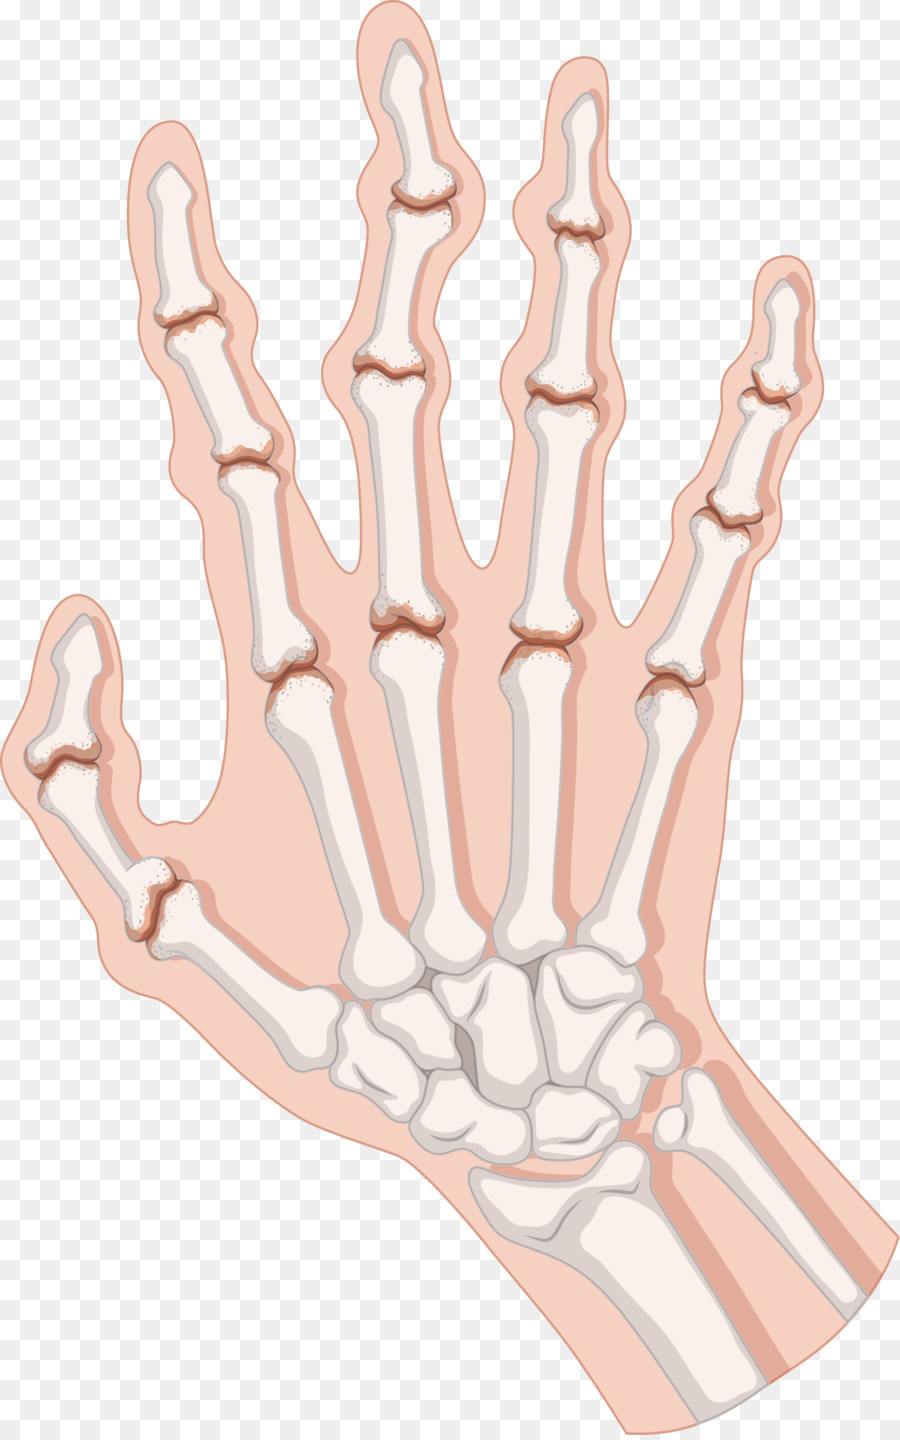 Rheumatoid arthritis clip art. Bone clipart body